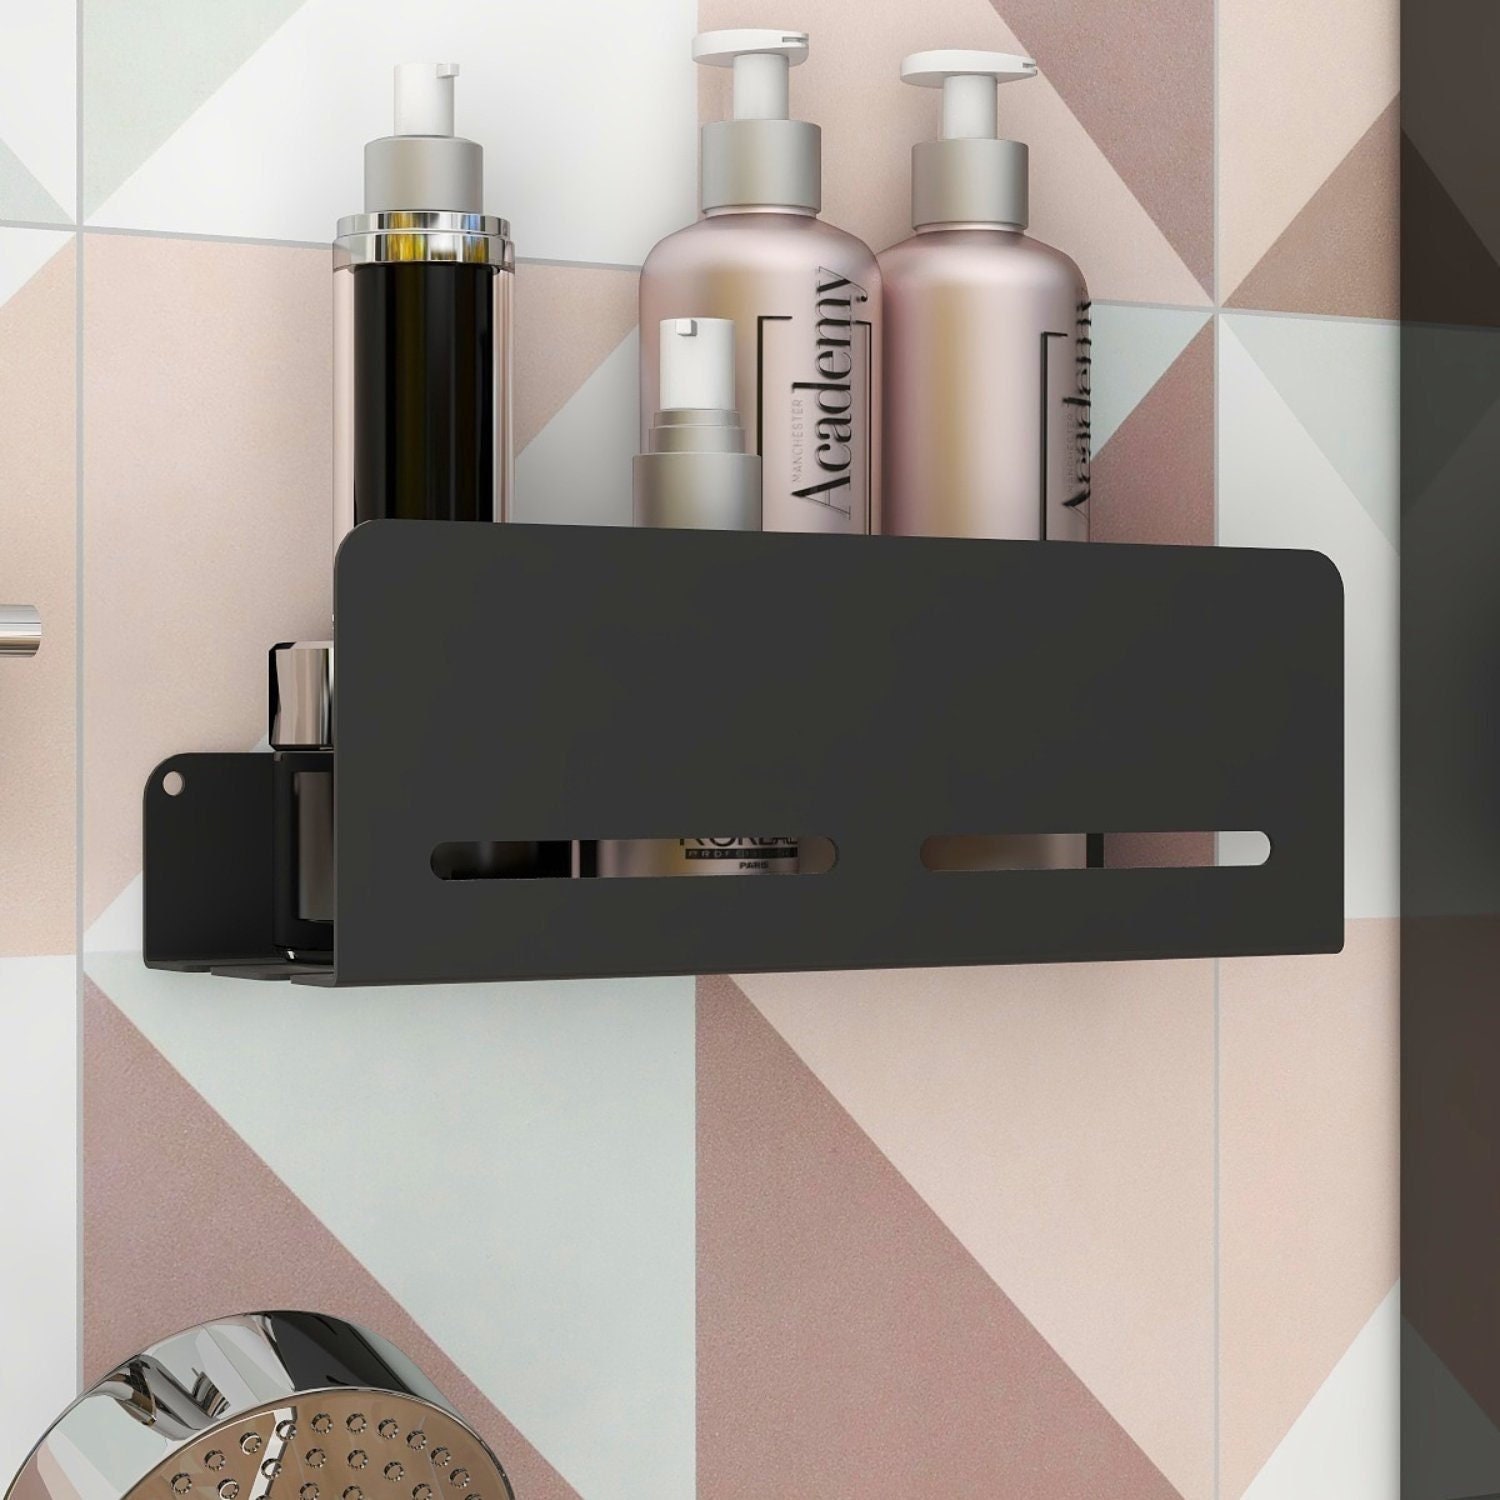 MICCK Bathroom Shelf Shampoo Shower Shelves Wall Mounted For